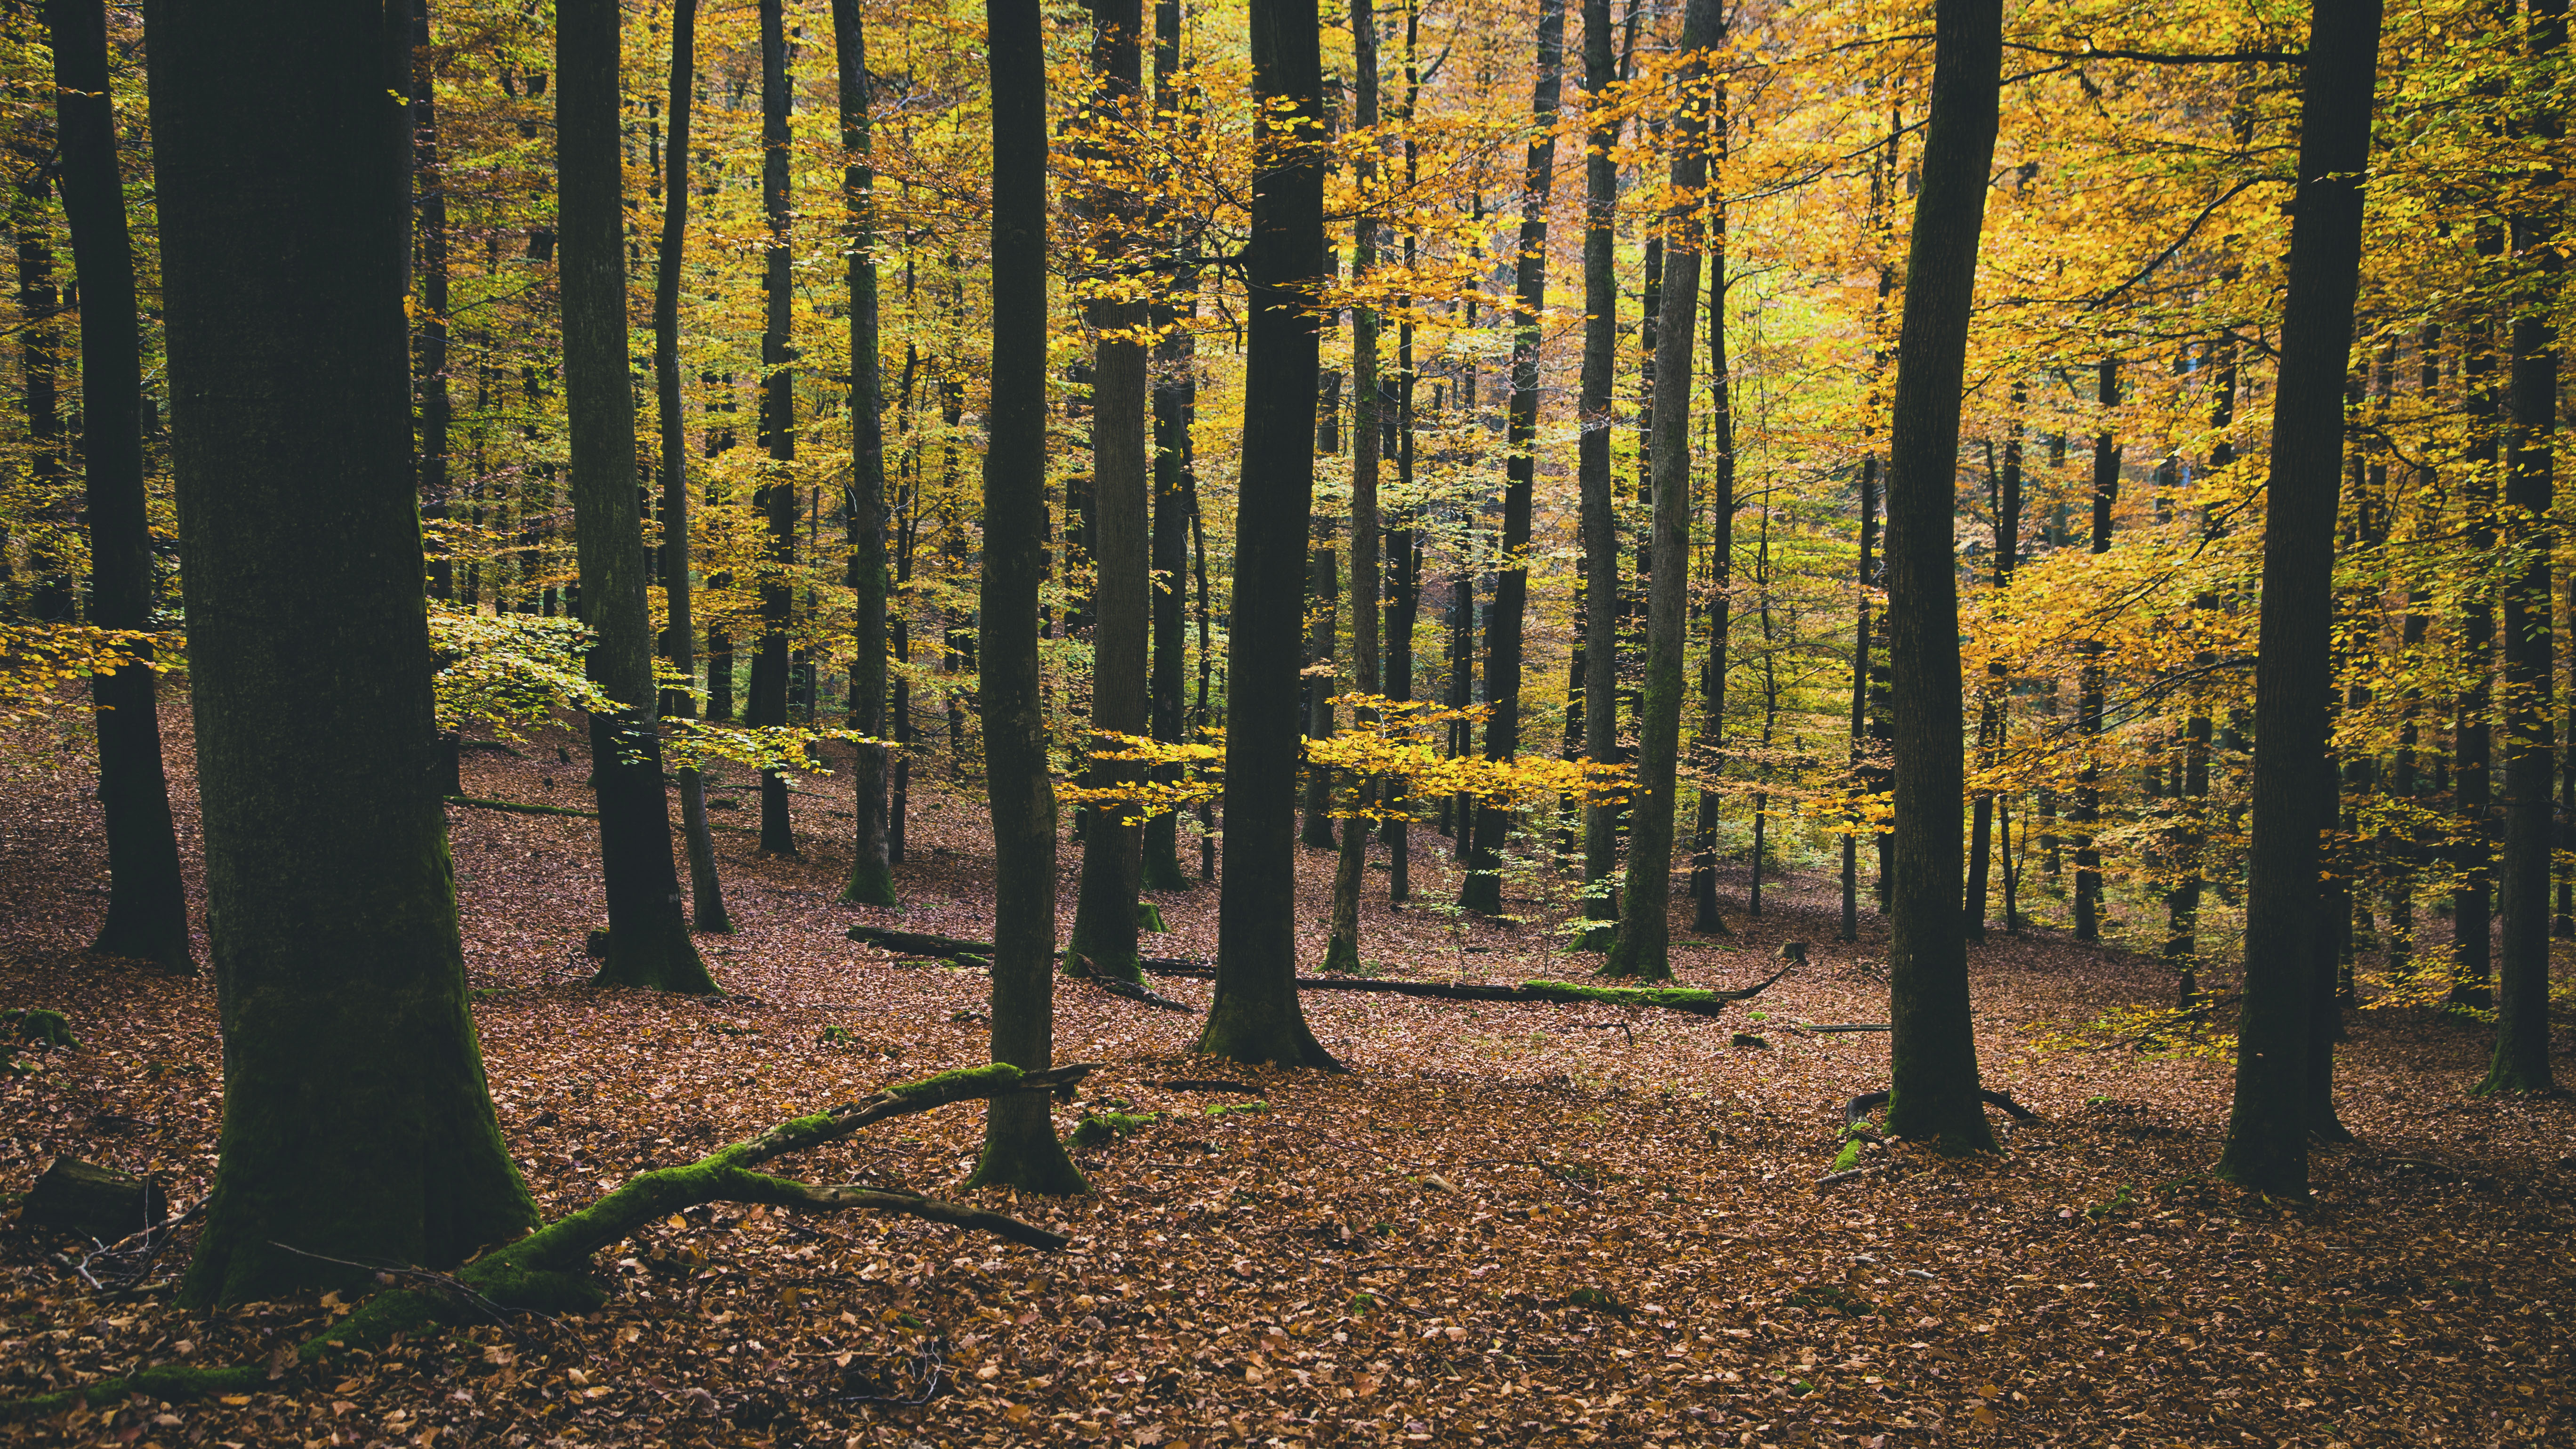 102995 descargar imagen naturaleza, árboles, otoño, follaje: fondos de pantalla y protectores de pantalla gratis